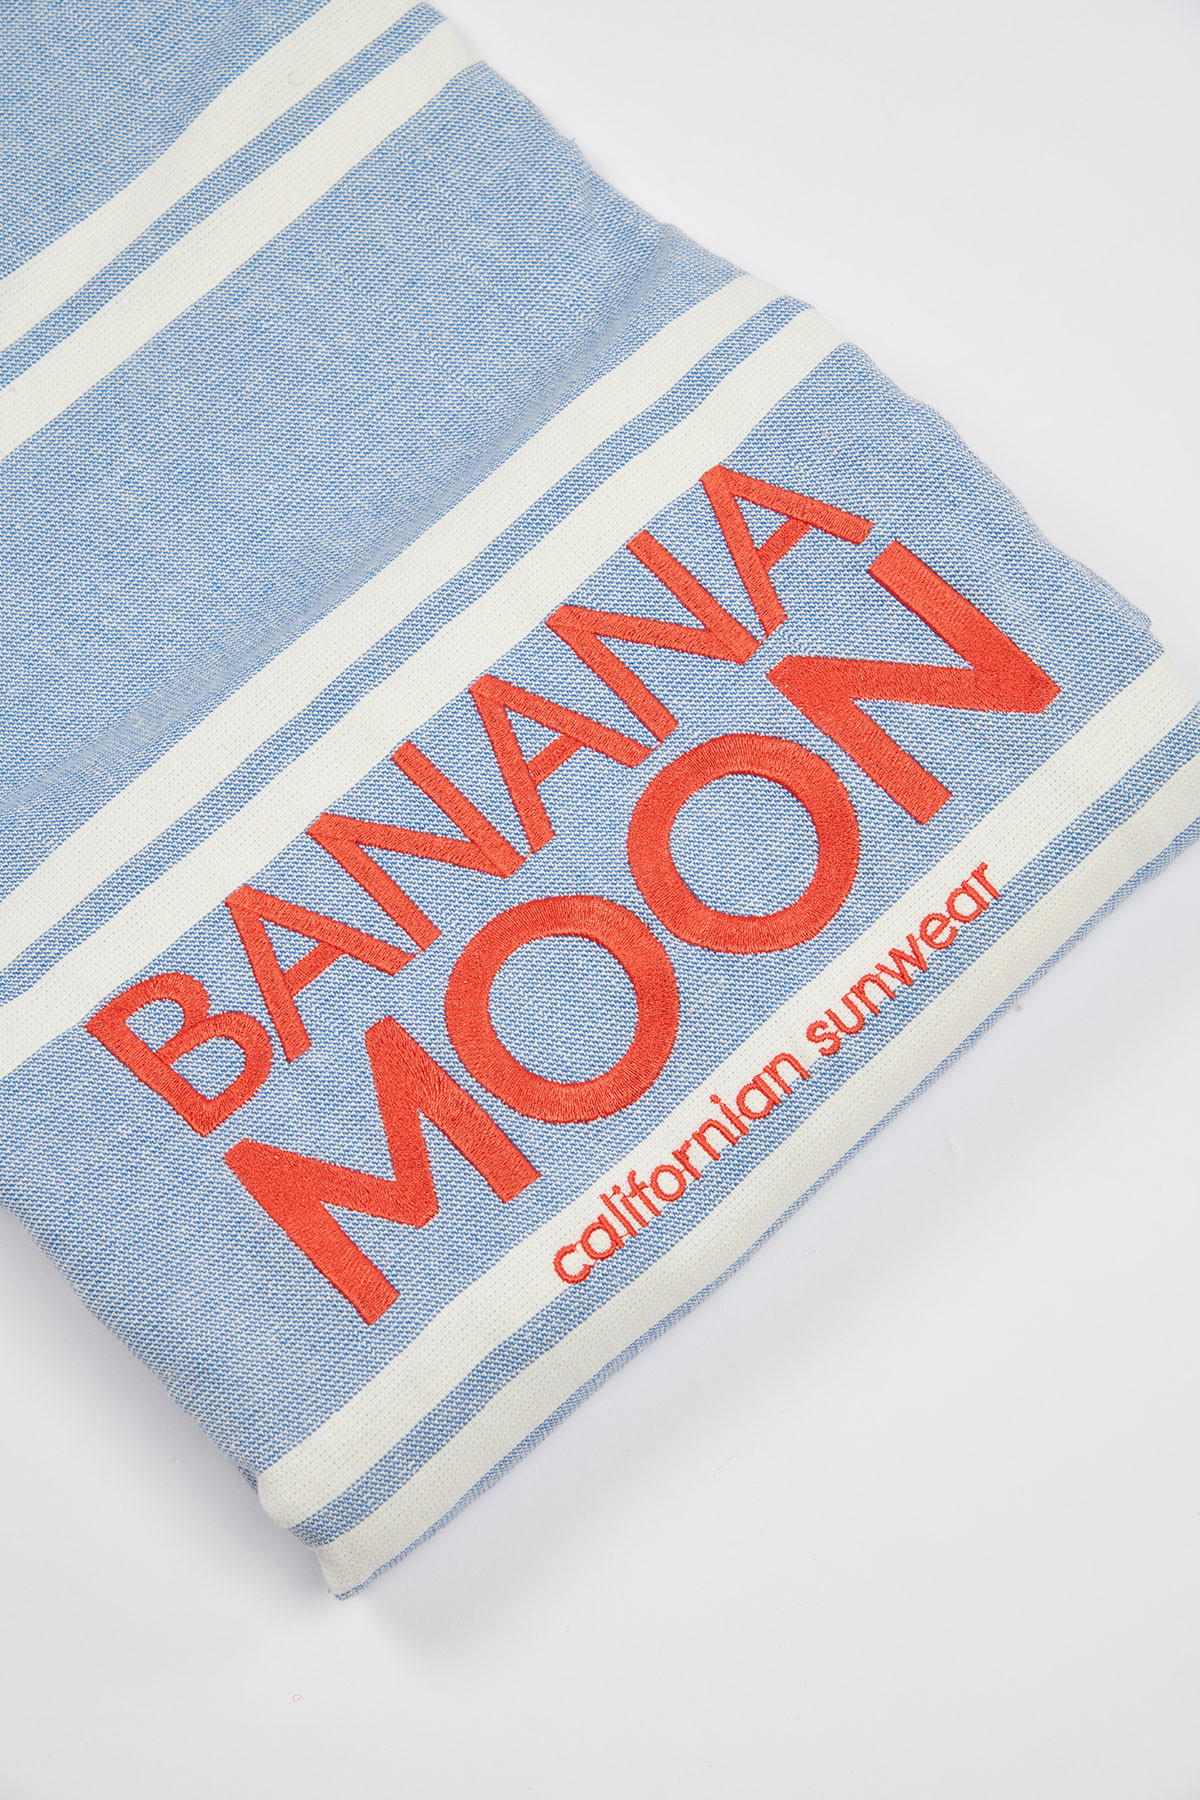 blouse of ten tweede Yzia Marbella blauwe wikkeldoek| Banana Moon® | Banana Moon ®